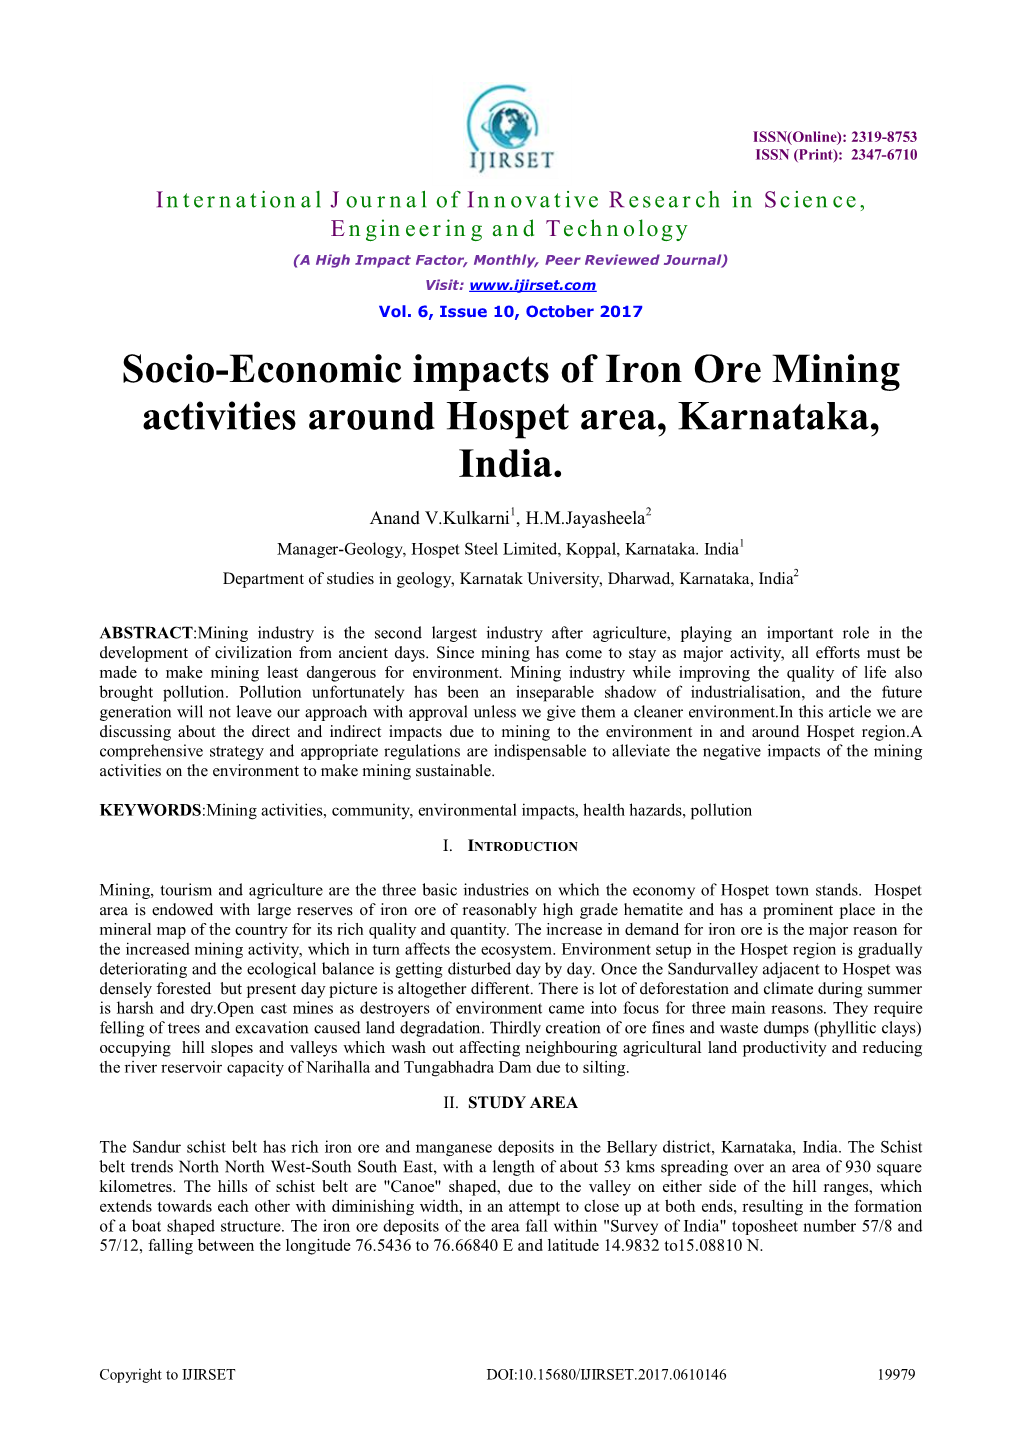 Socio-Economic Impacts of Iron Ore Mining Activities Around Hospet Area, Karnataka, India